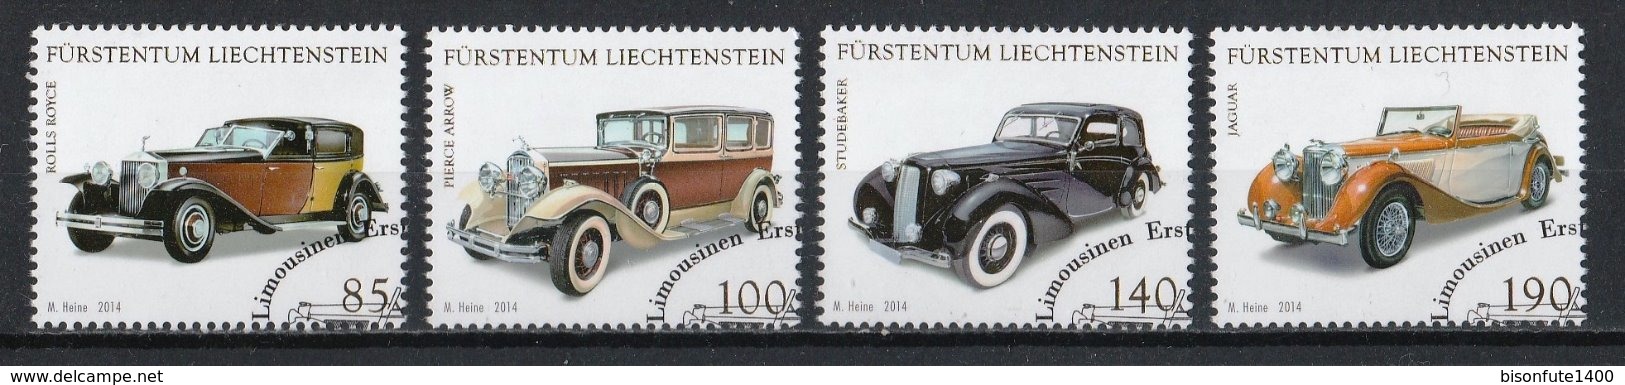 Liechtenstein 2014 : Timbres Yvert & Tellier N° 1666 - 1667 - 1668 Et 1669 Avec Oblit. Rondes. - Used Stamps